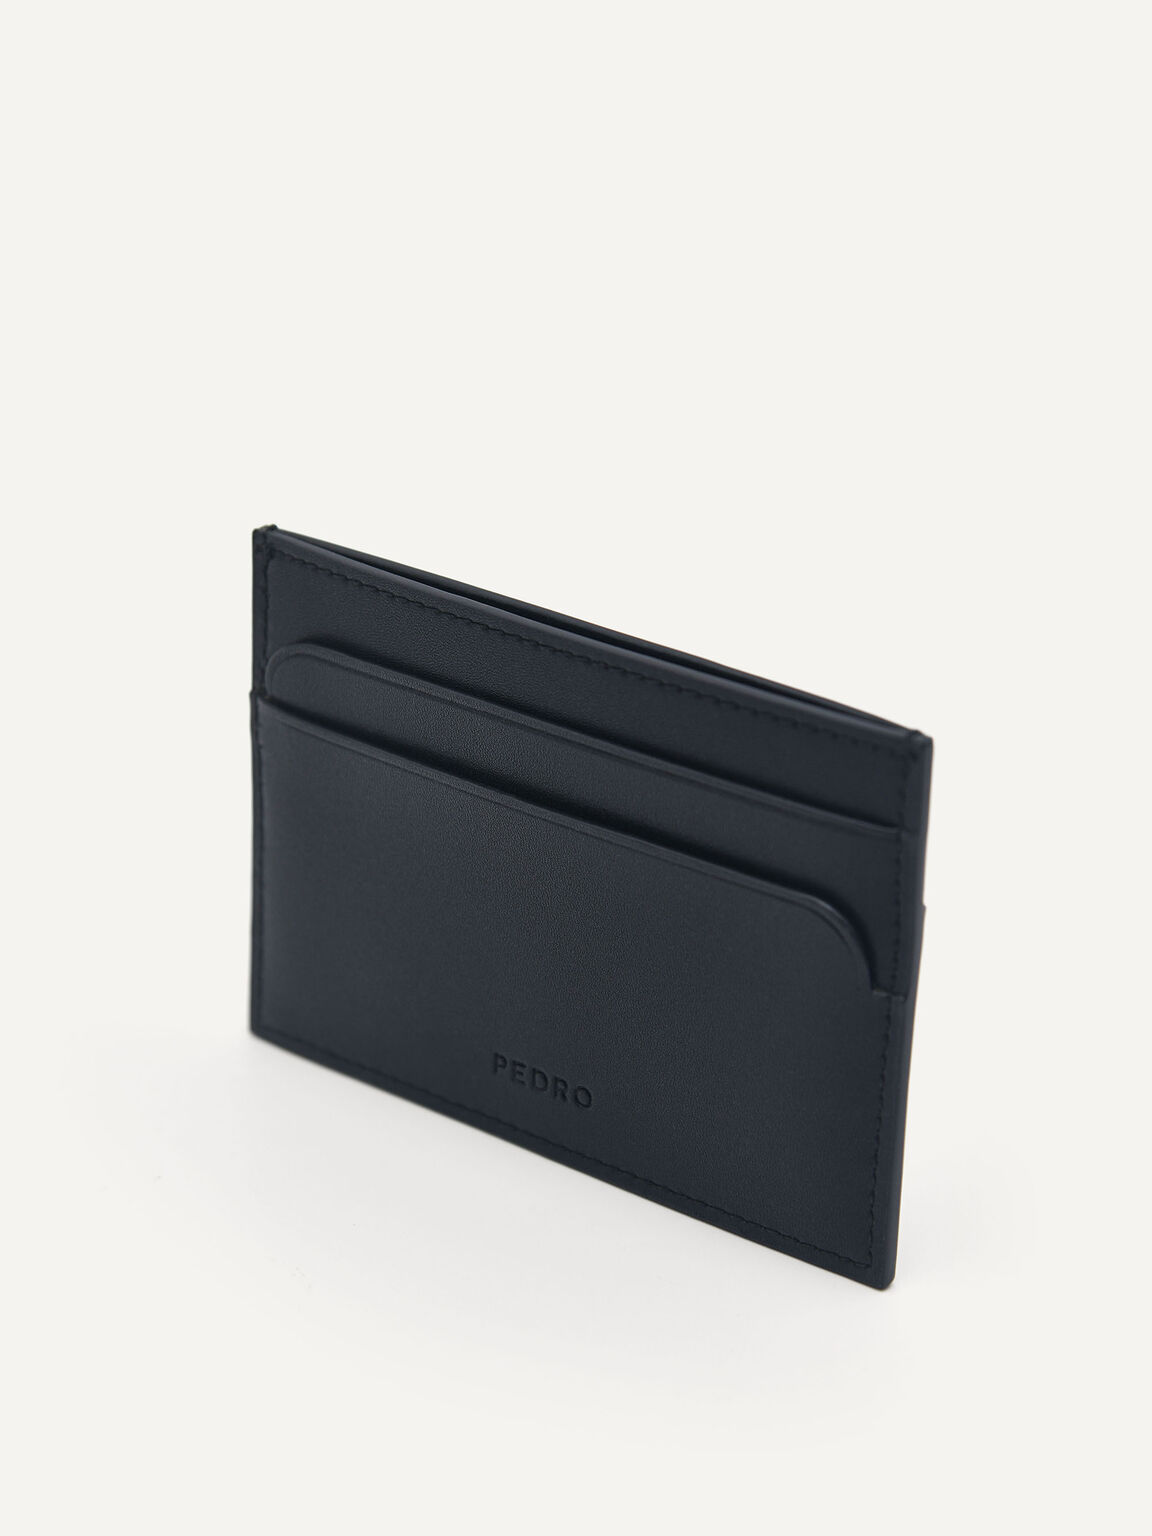 PEDRO Icon Mini Leather Card Holder, Black, hi-res